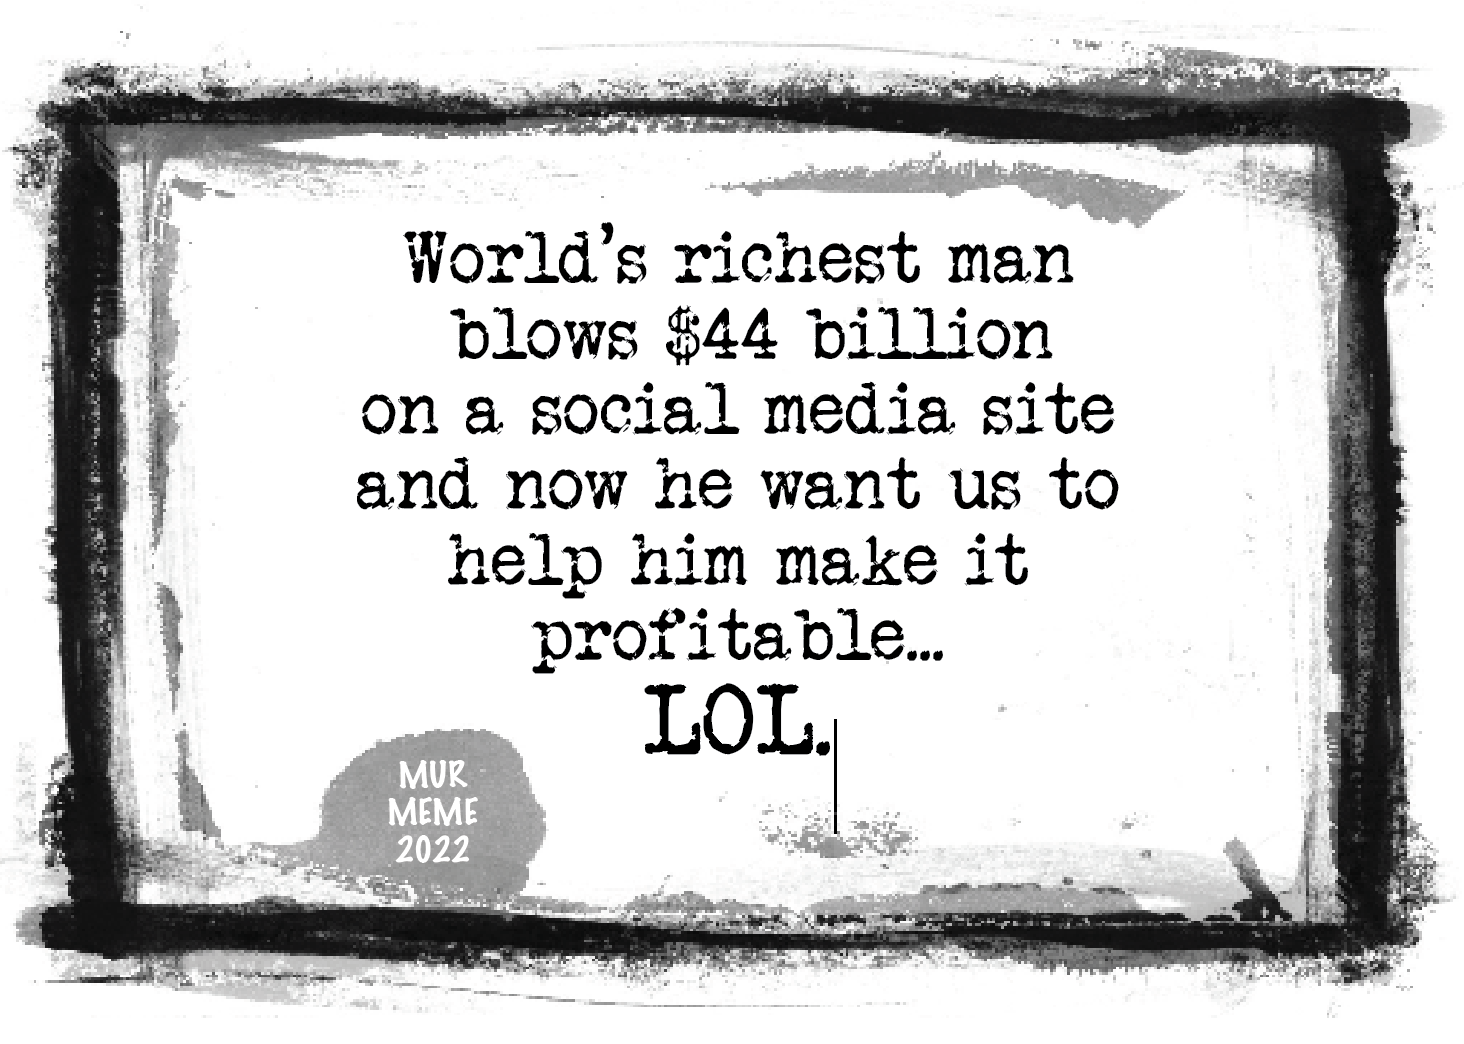 World's richest man
blows $44 pillion
on a social media site
and now ne want us to

nelp nim make it
profitable...

LOL.